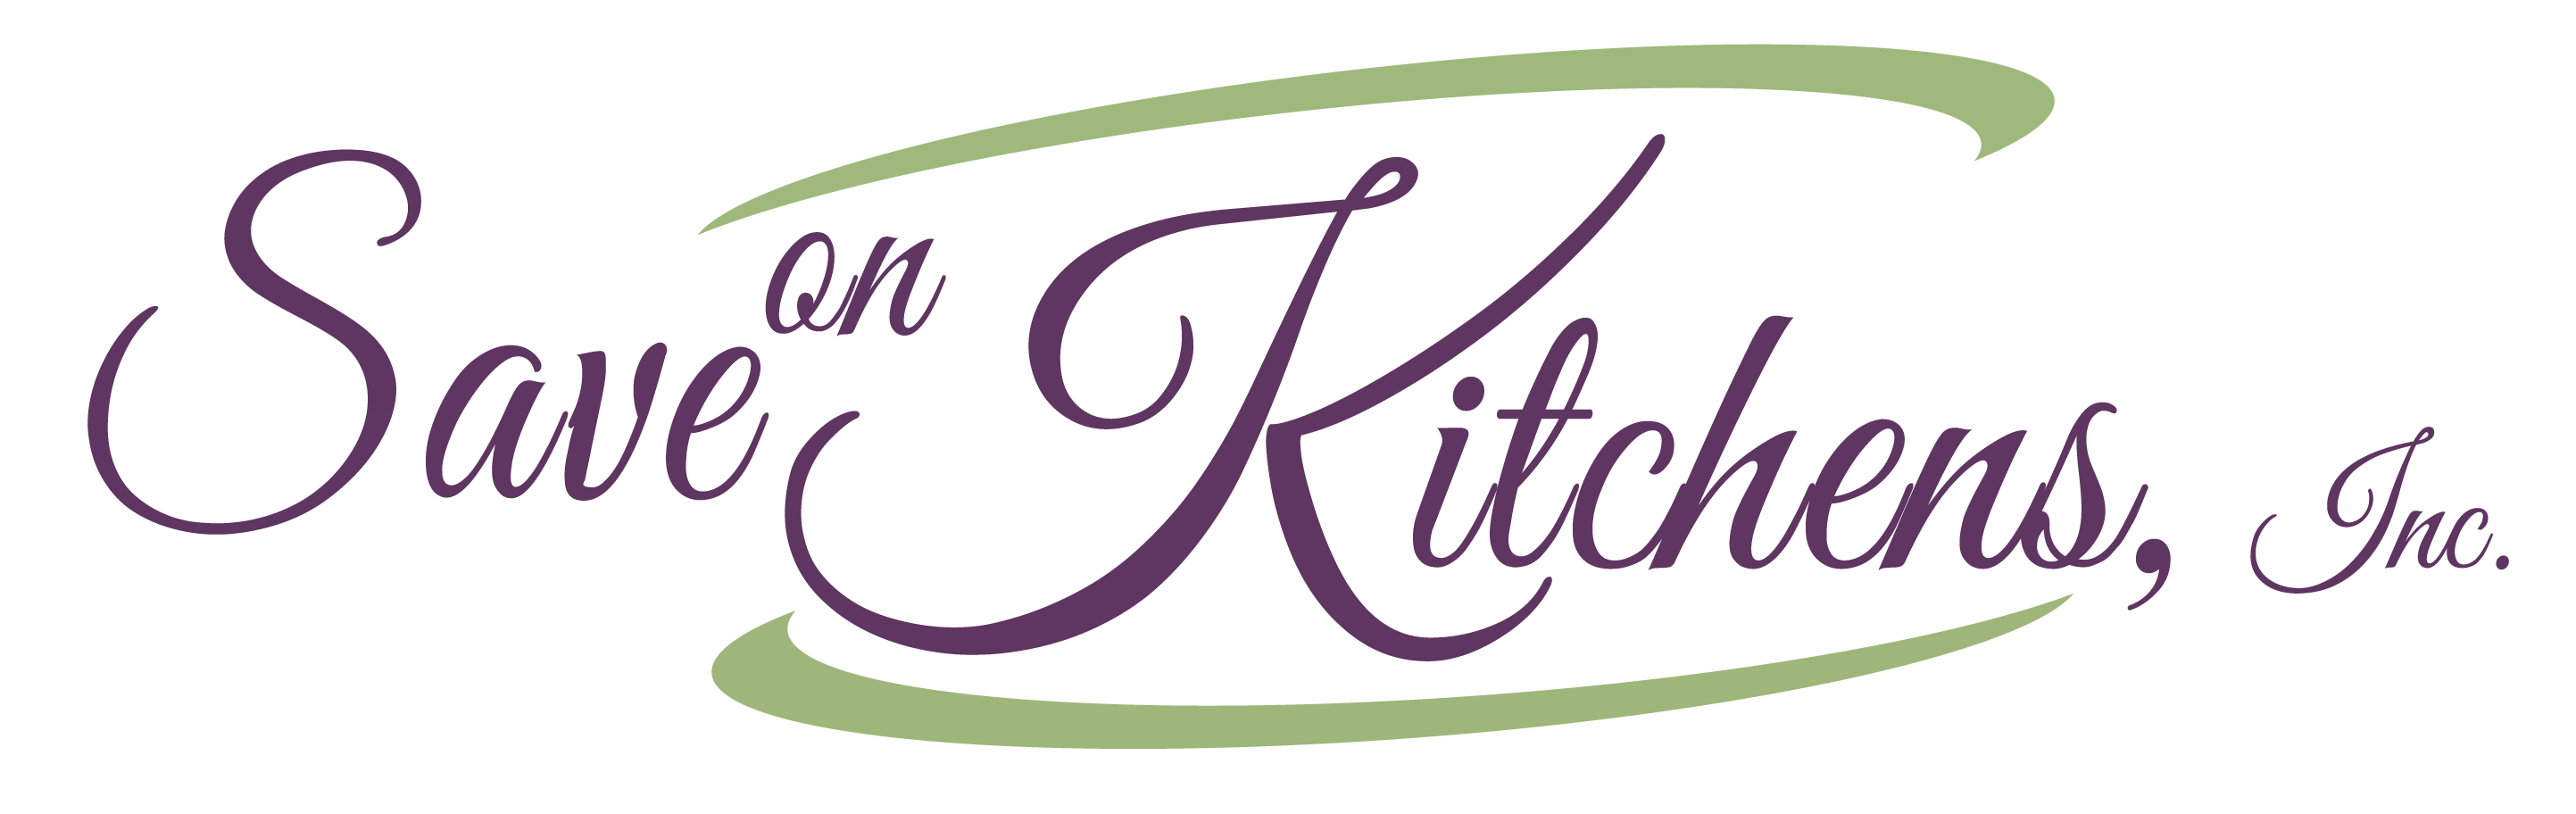 Save on Kitchens, Inc. Logo